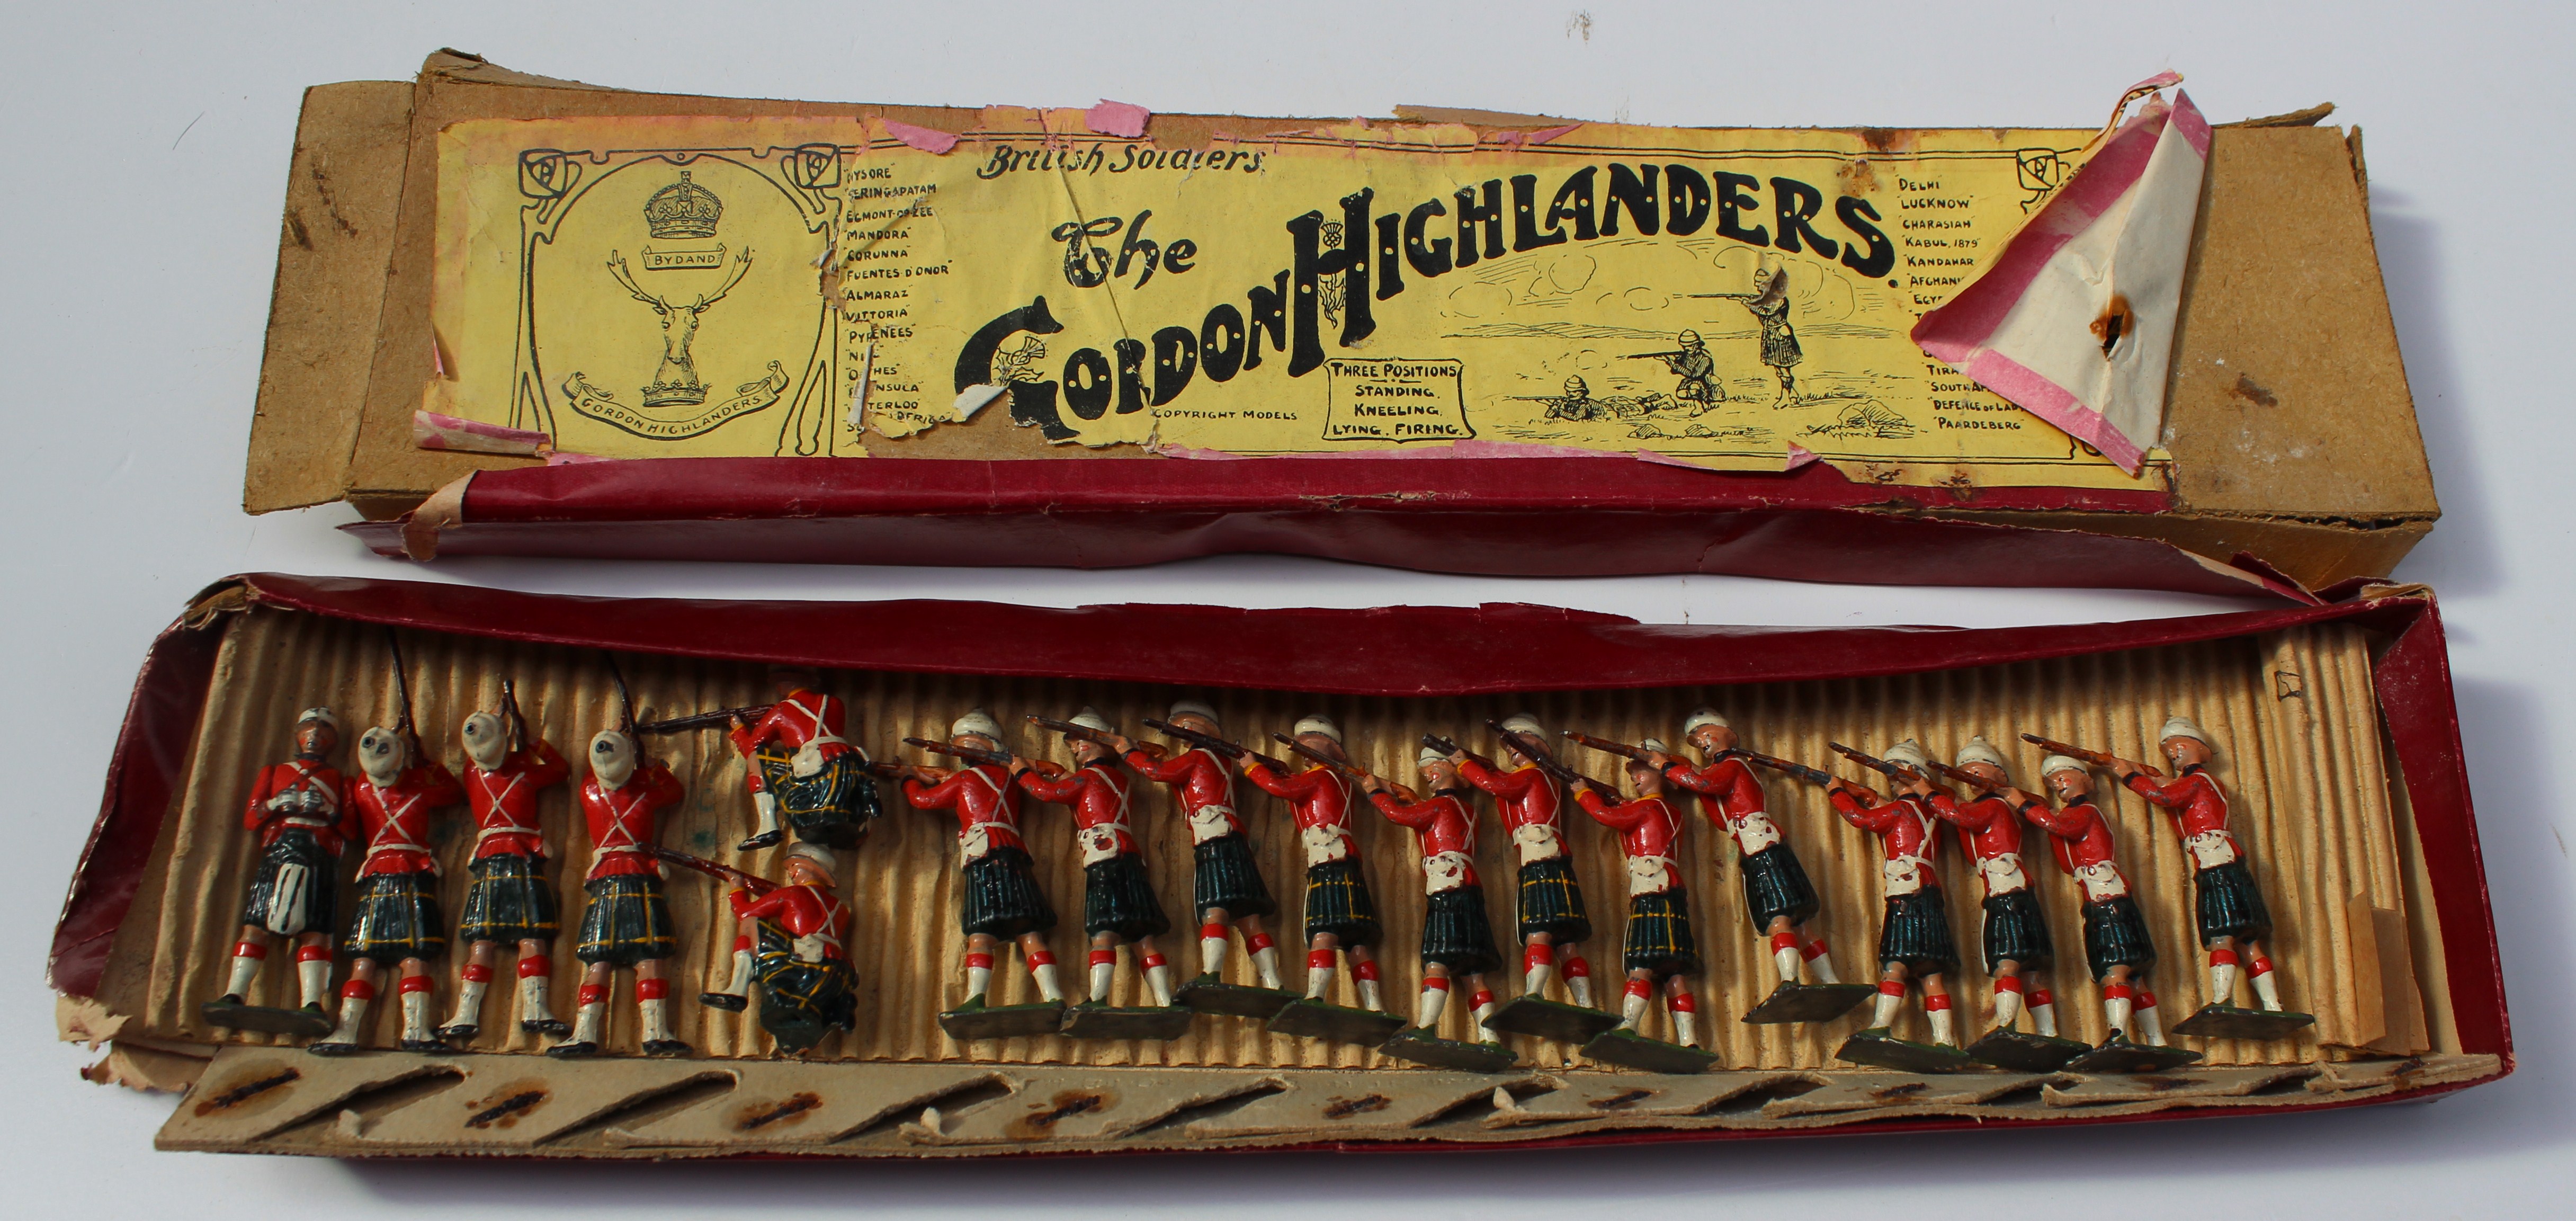 Britains soldiers - The Gordon Highlanders - eighteen figures, standing, - Image 5 of 5